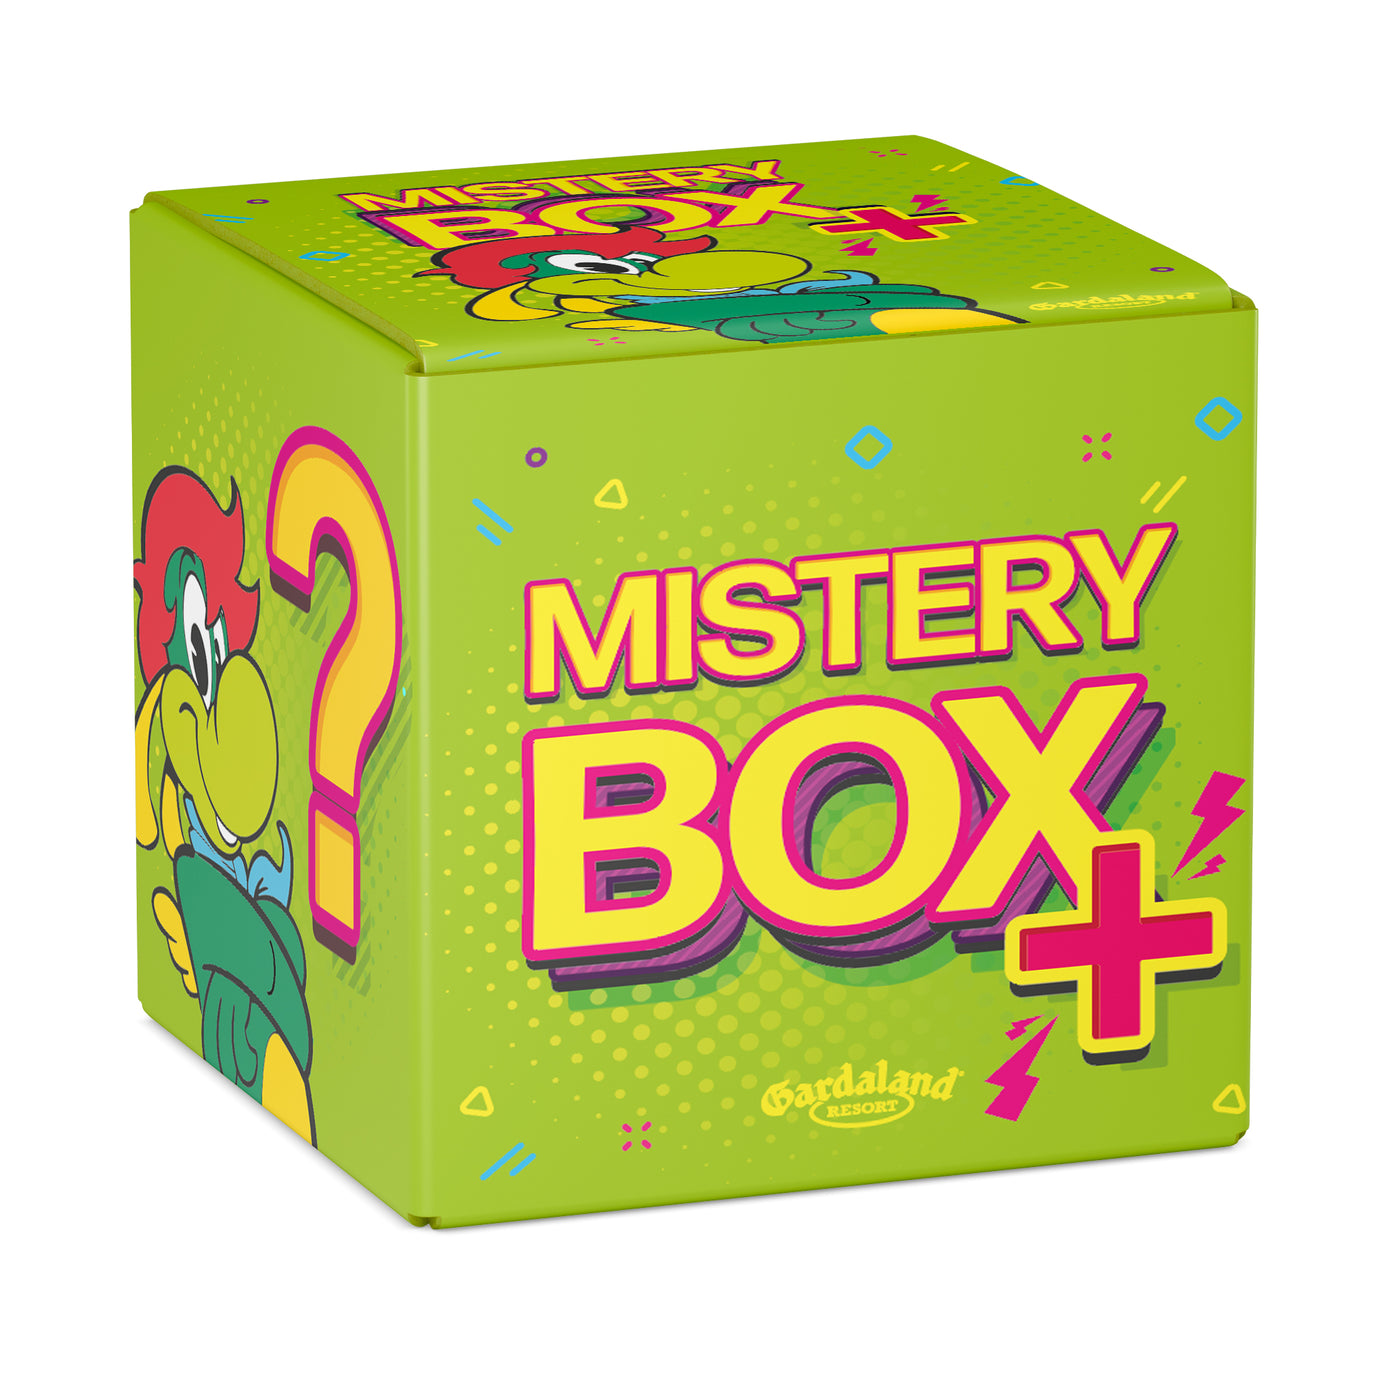 MISTERY BOX PLUS